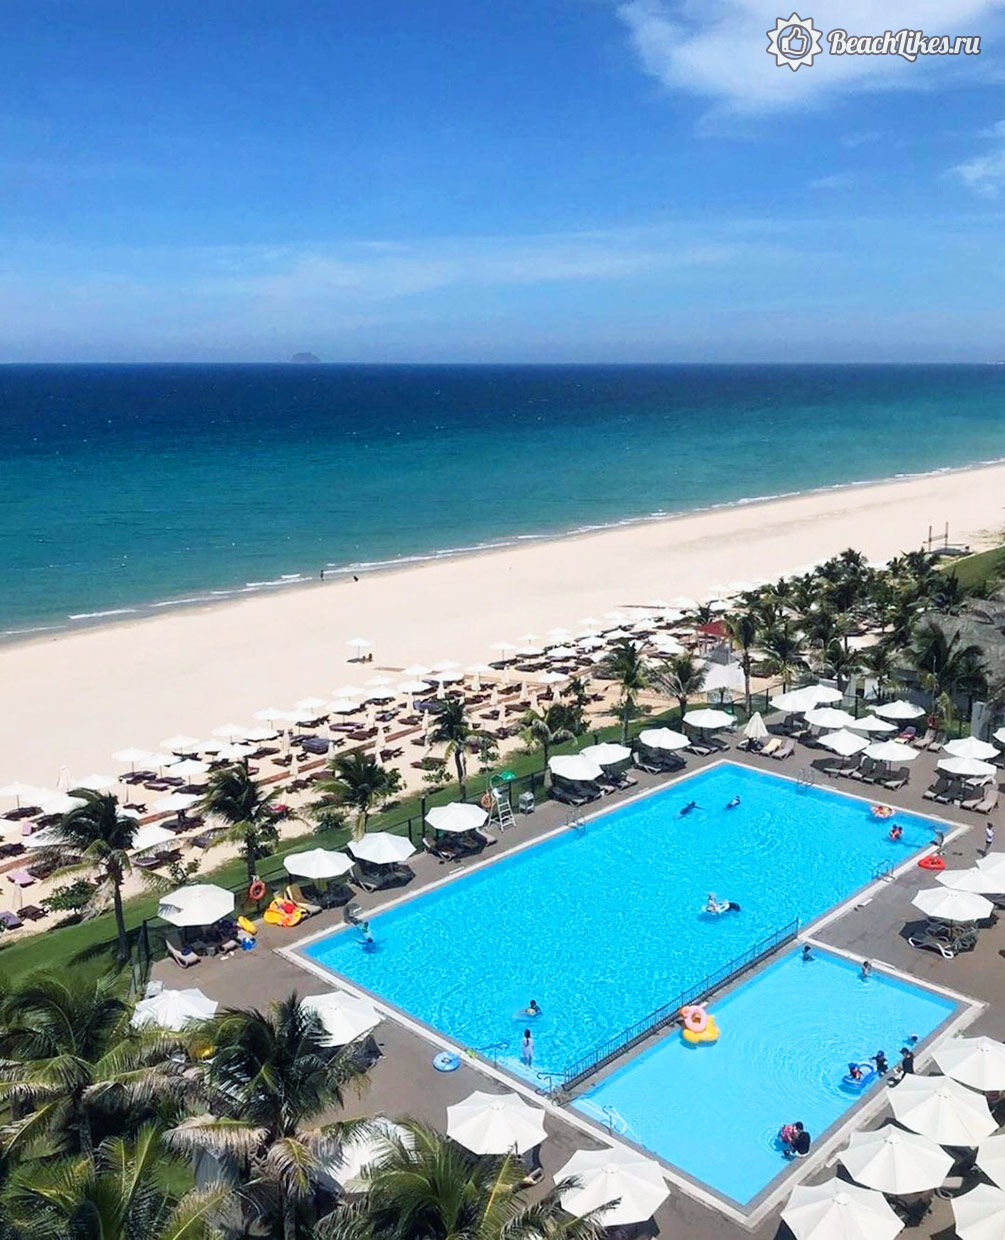 Swandor Hotels & Resorts - Cam Ranh Вьетнам фото пляжа при отеле